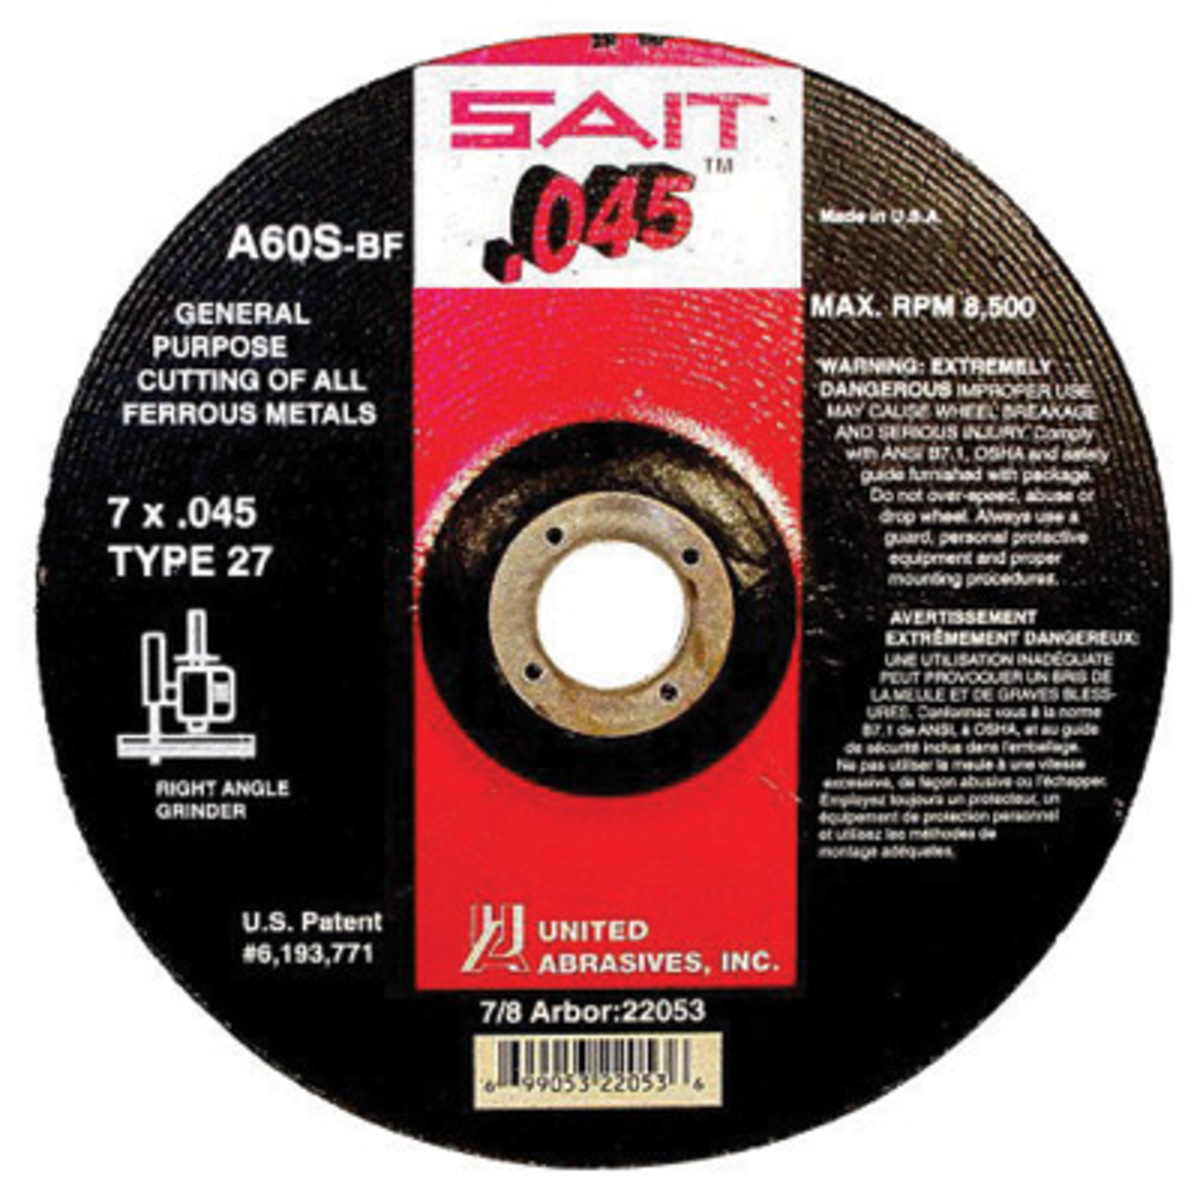 Airgas - UAB22047 - United Abrasives/SAIT 6